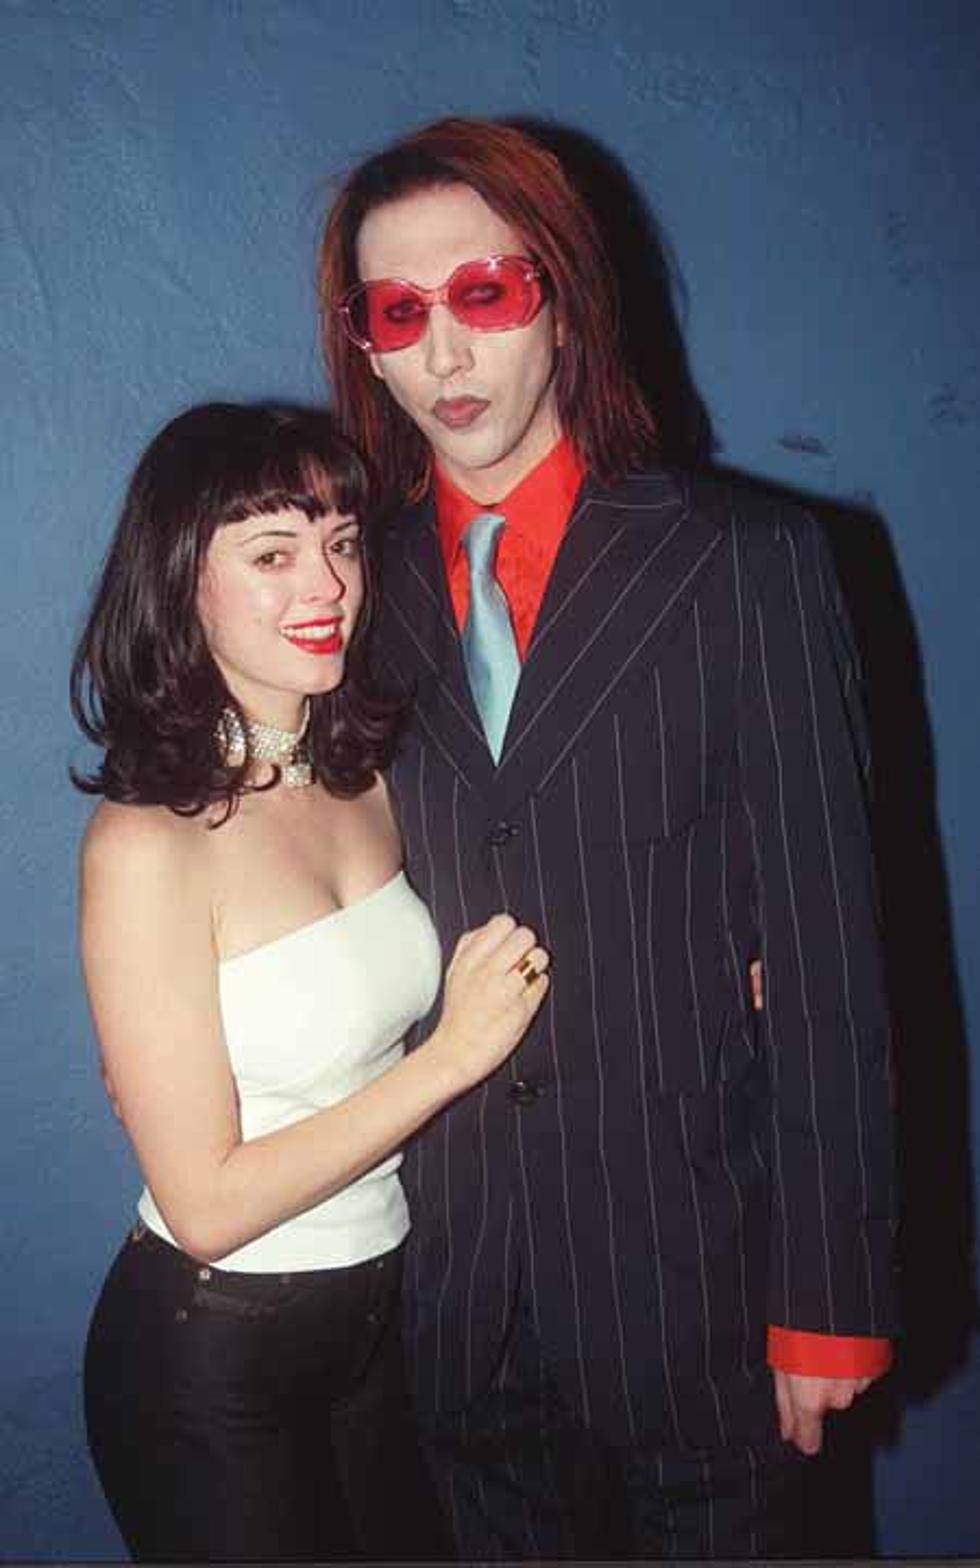 Marilyn Manson Year by Year: 1994-2020 Photographs